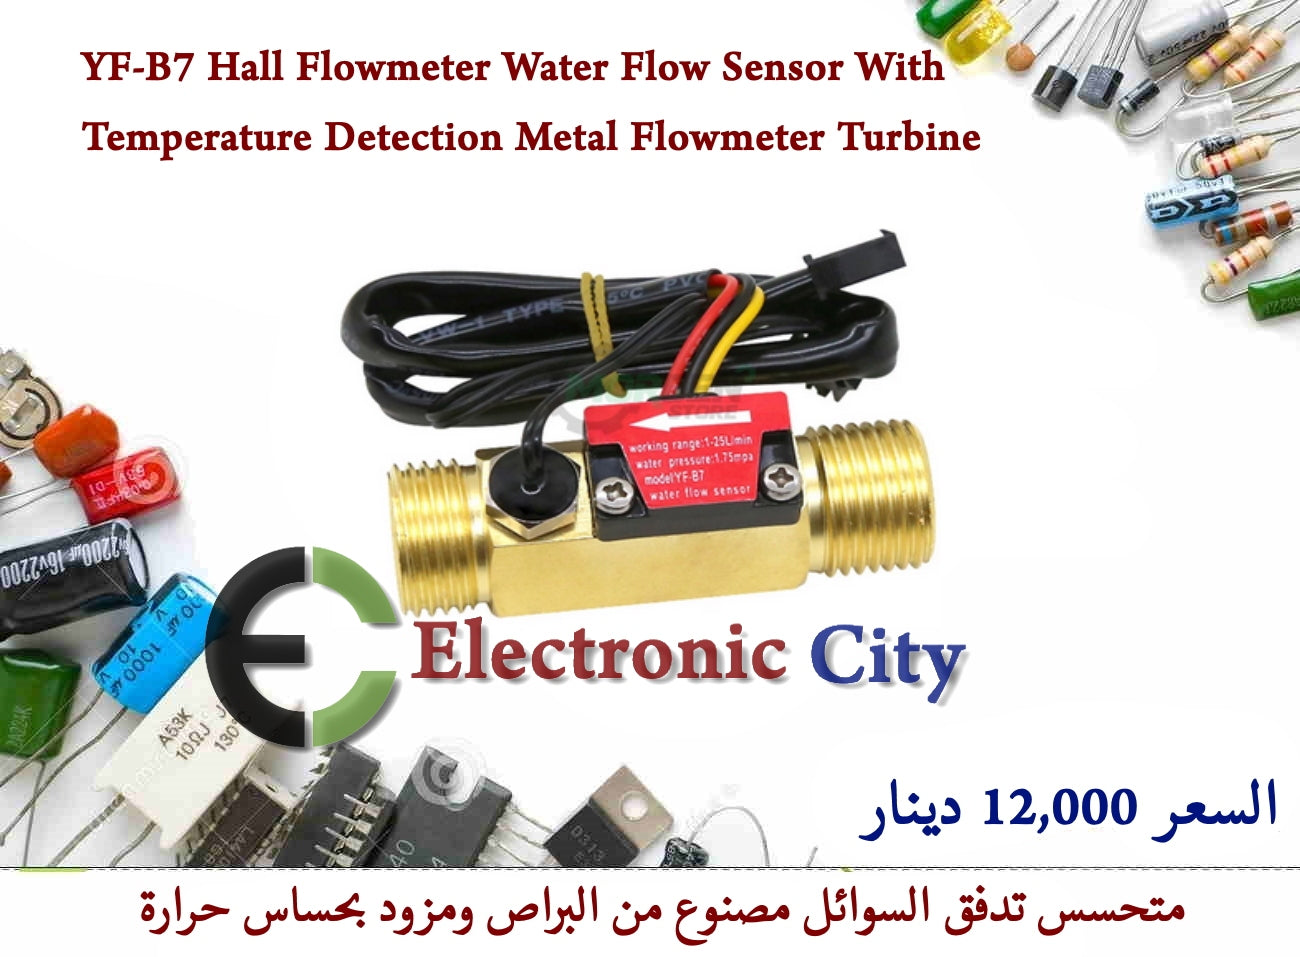 YF-B7 Hall Flowmeter Water Flow Sensor With Temperature Detection Metal Flowmeter Turbine